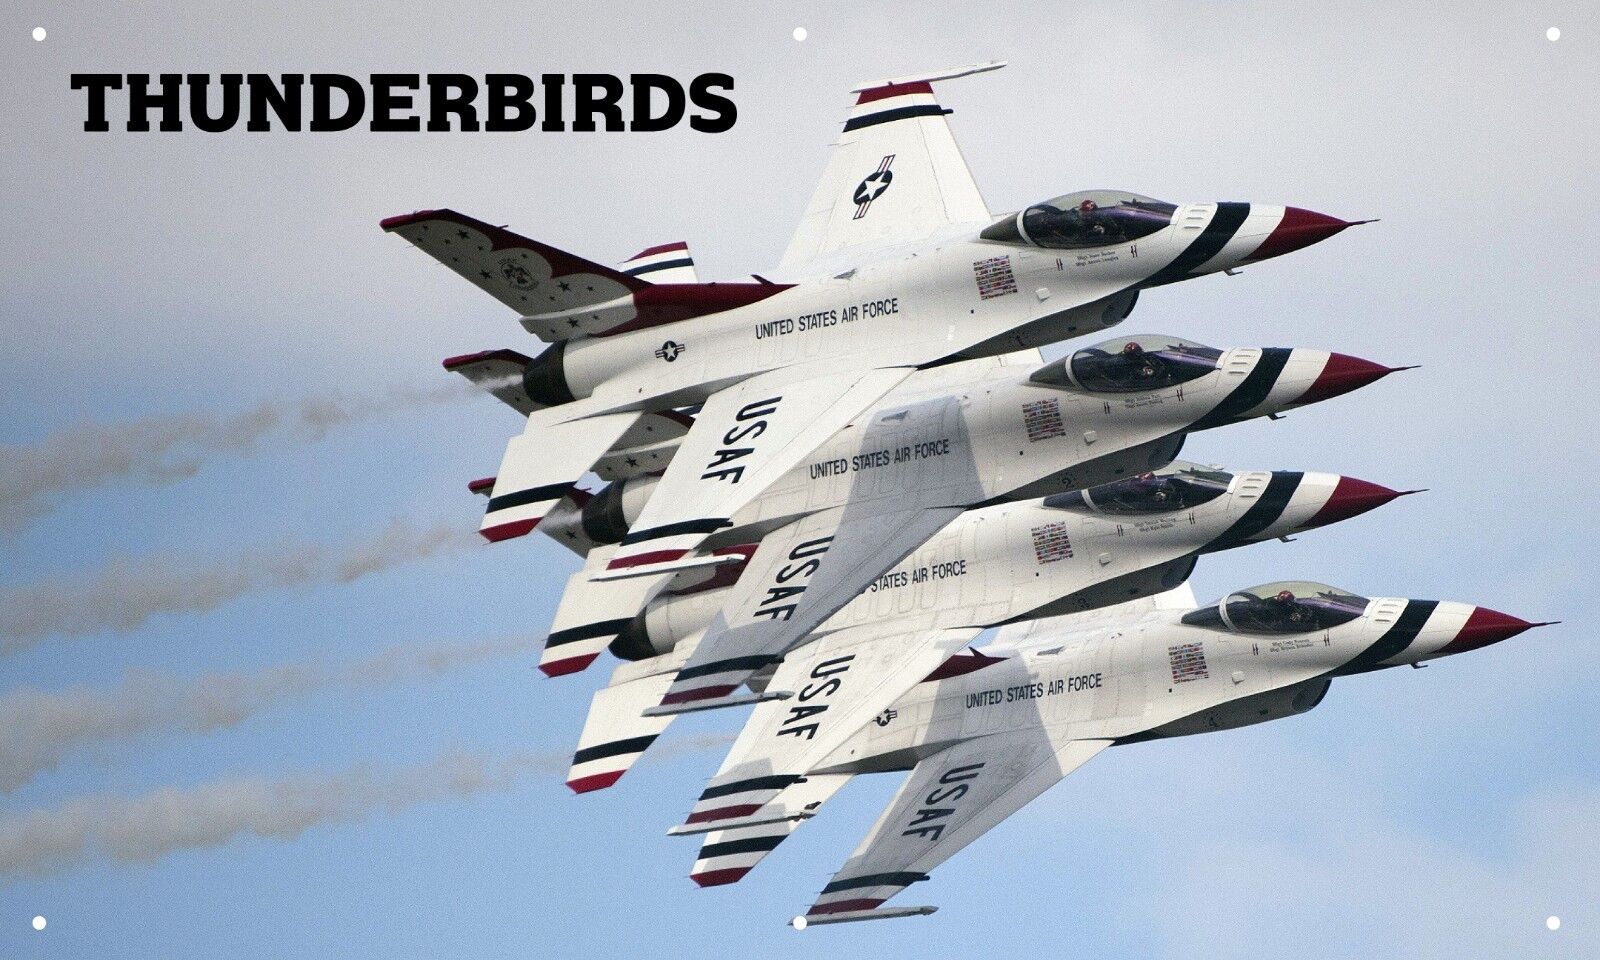 U.S.A.F Thunderbirds 3'X5' VINYL BANNER MAN CAVE AIR FORCE AMERICA PLANES JETS 